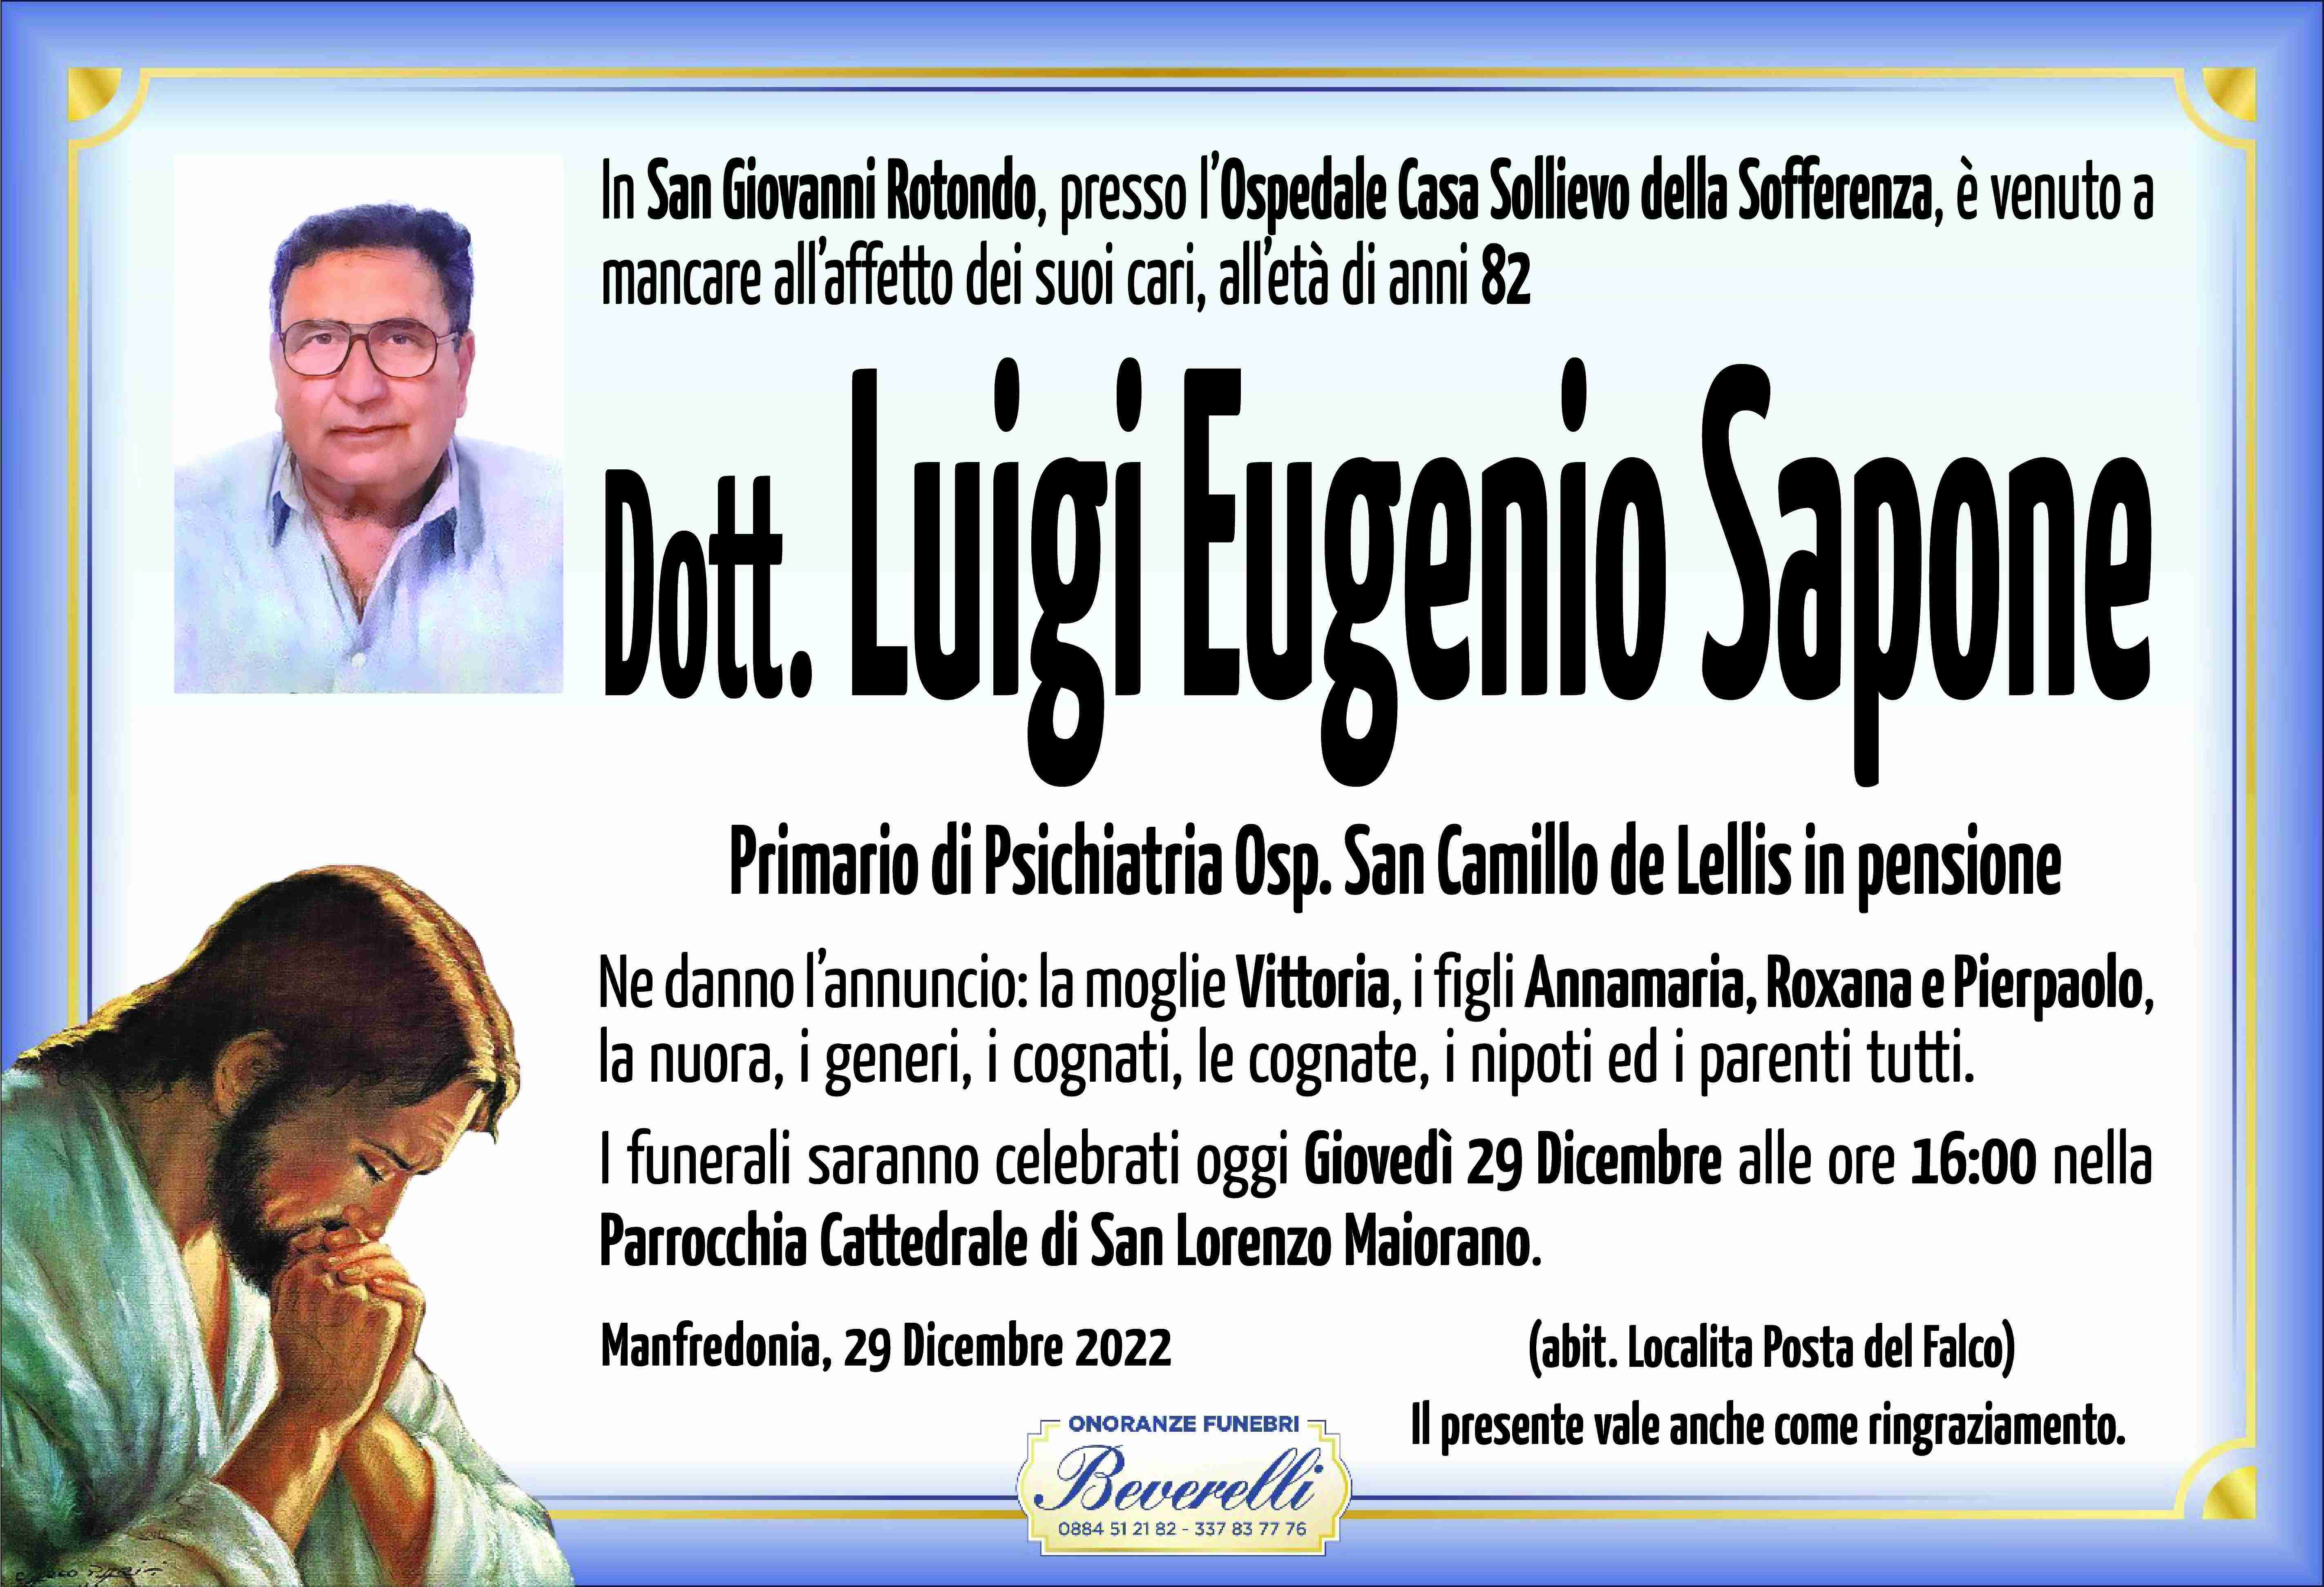 Luigi Eugenio Sapone